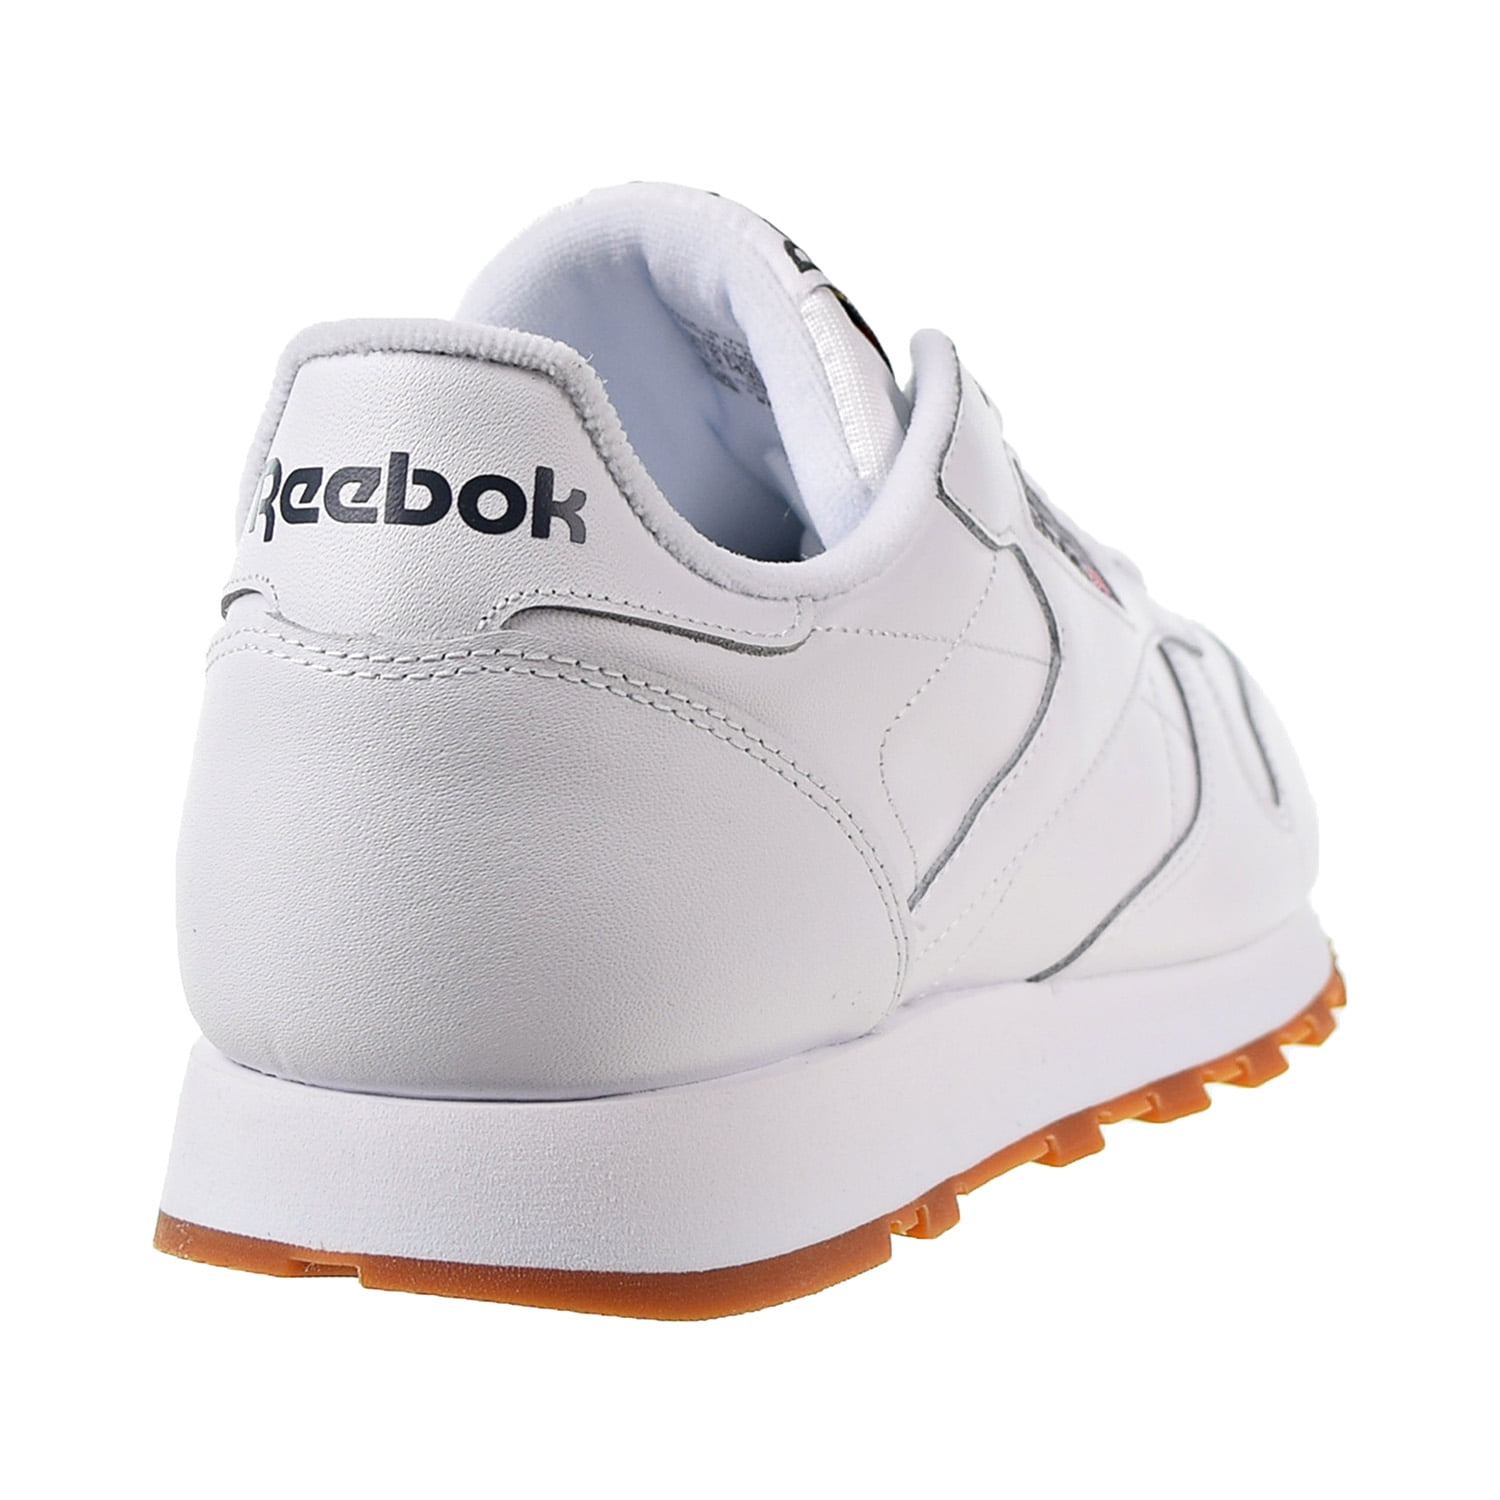 Reebok Classic Leather Men's Shoes Intense White-Gum - Walmart.com